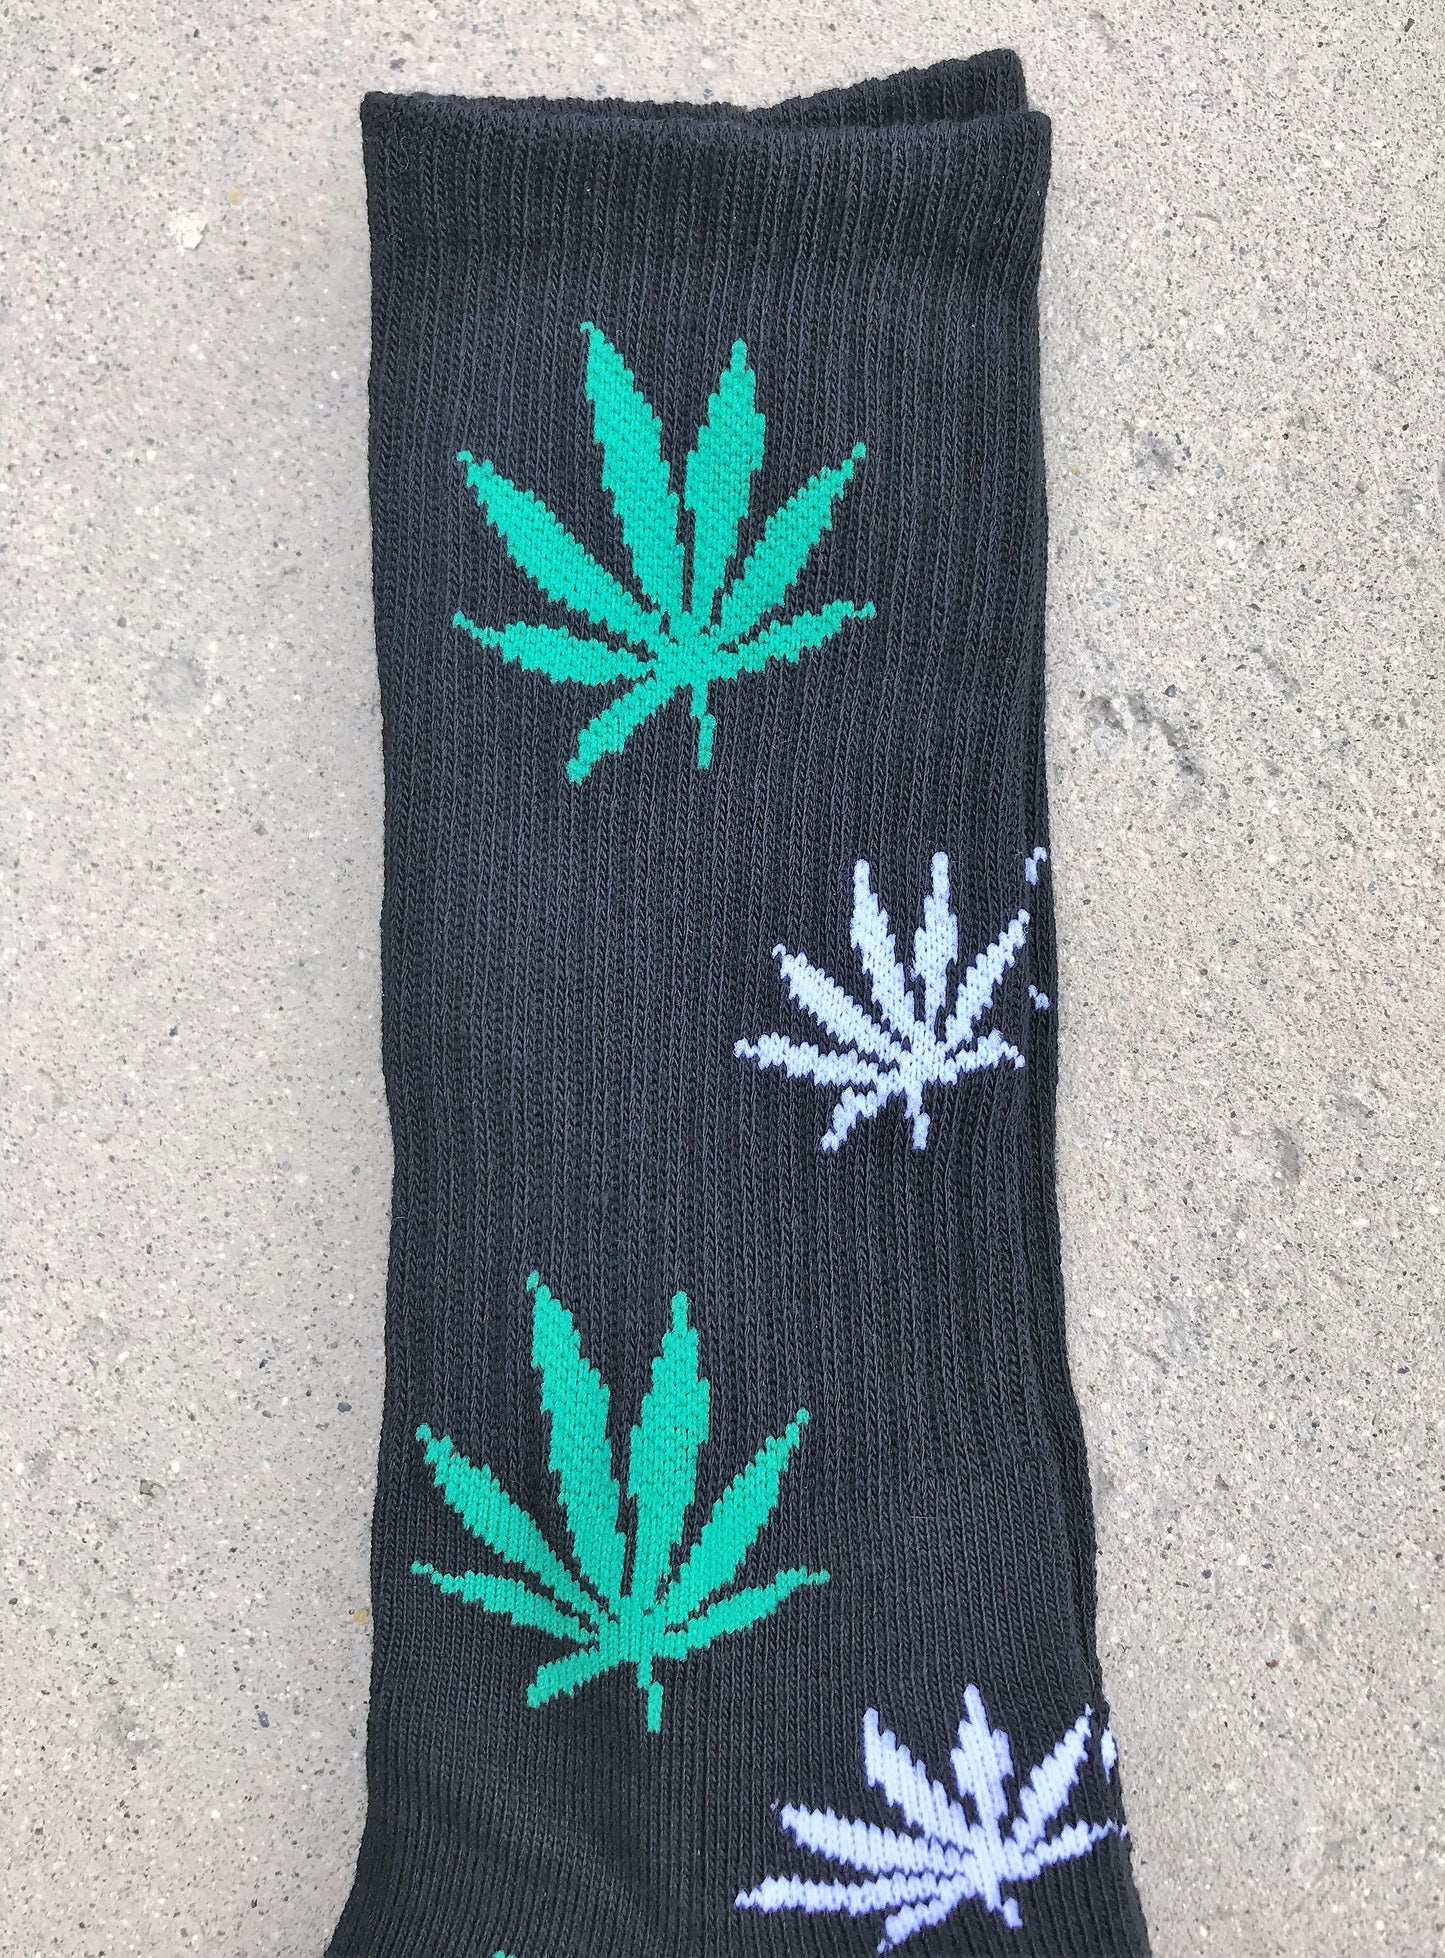 Unisex Mad Toro Socks Black with Green & White Leaves - 1 Pair